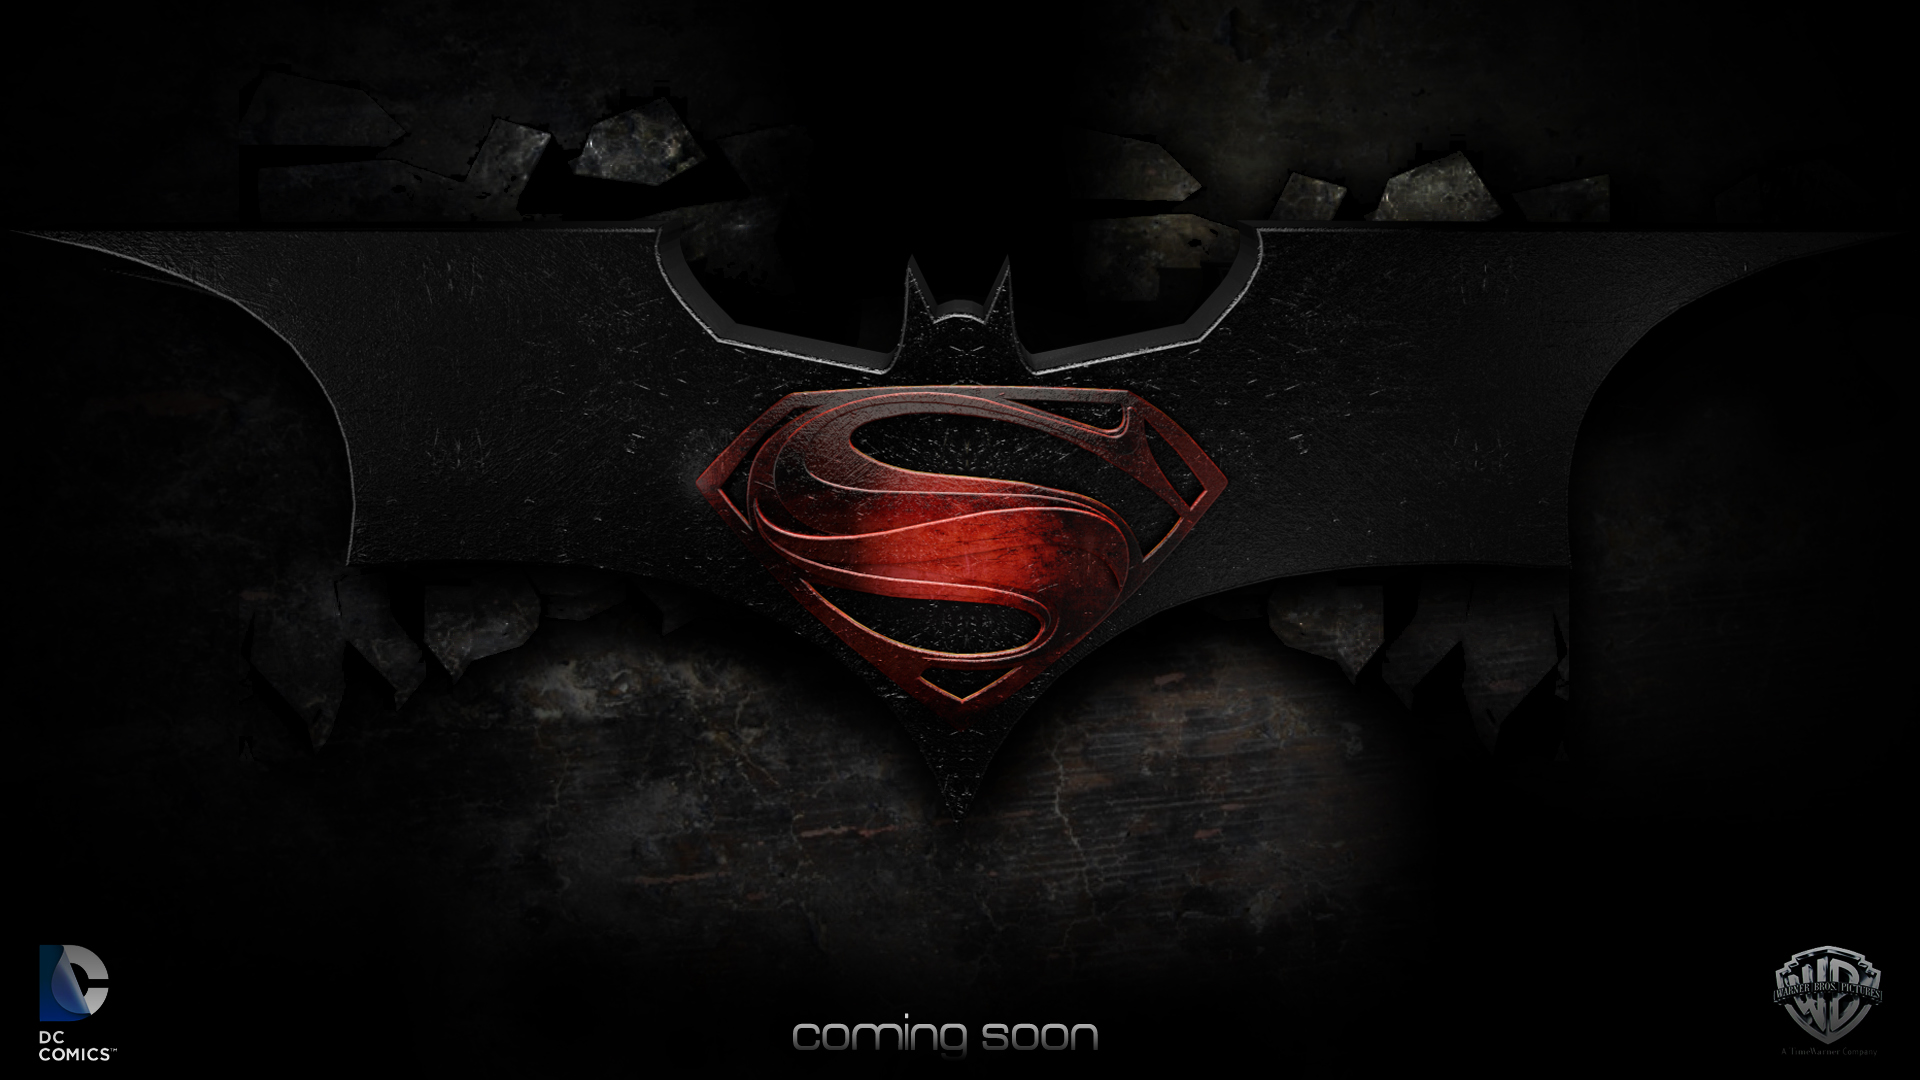 World S Finest Superman Vs Batman Wallpaper By Alex4everdn On